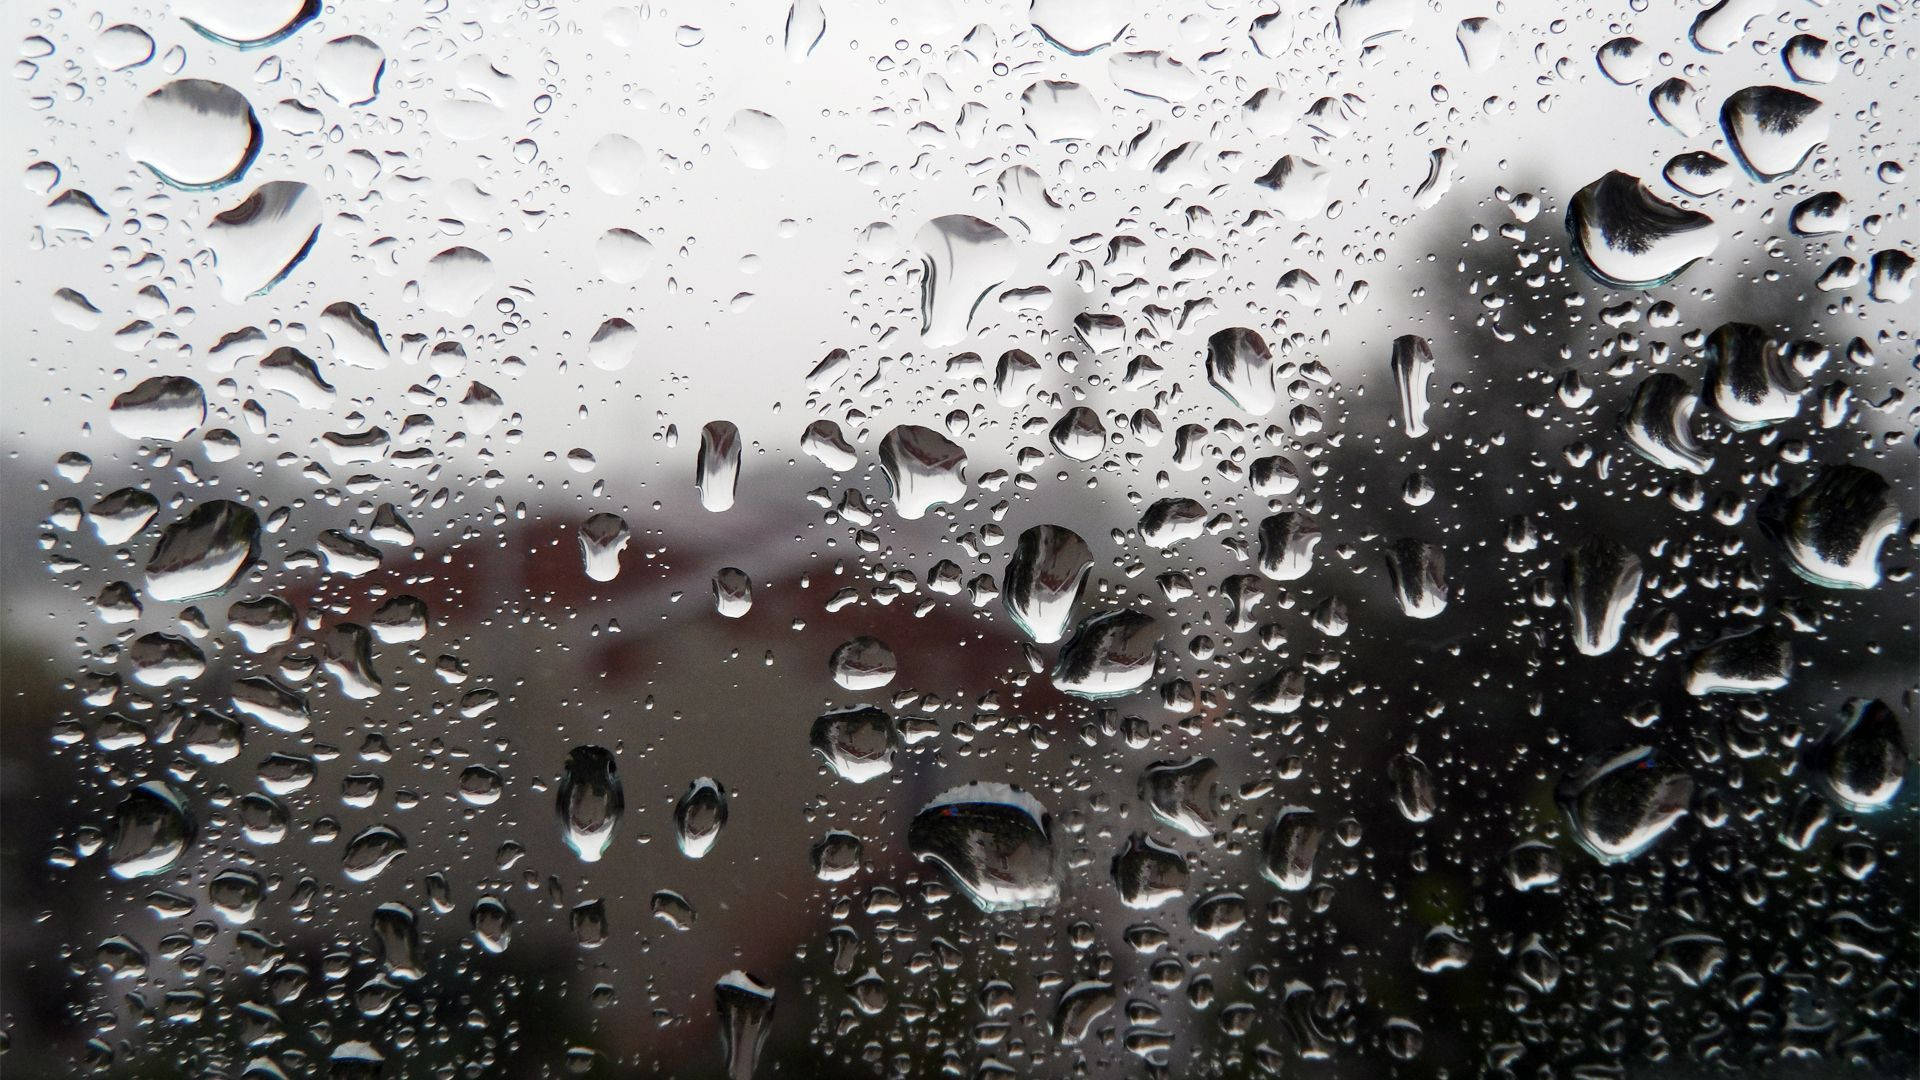 Falling Raindrops On Transparent Glass Pane Background